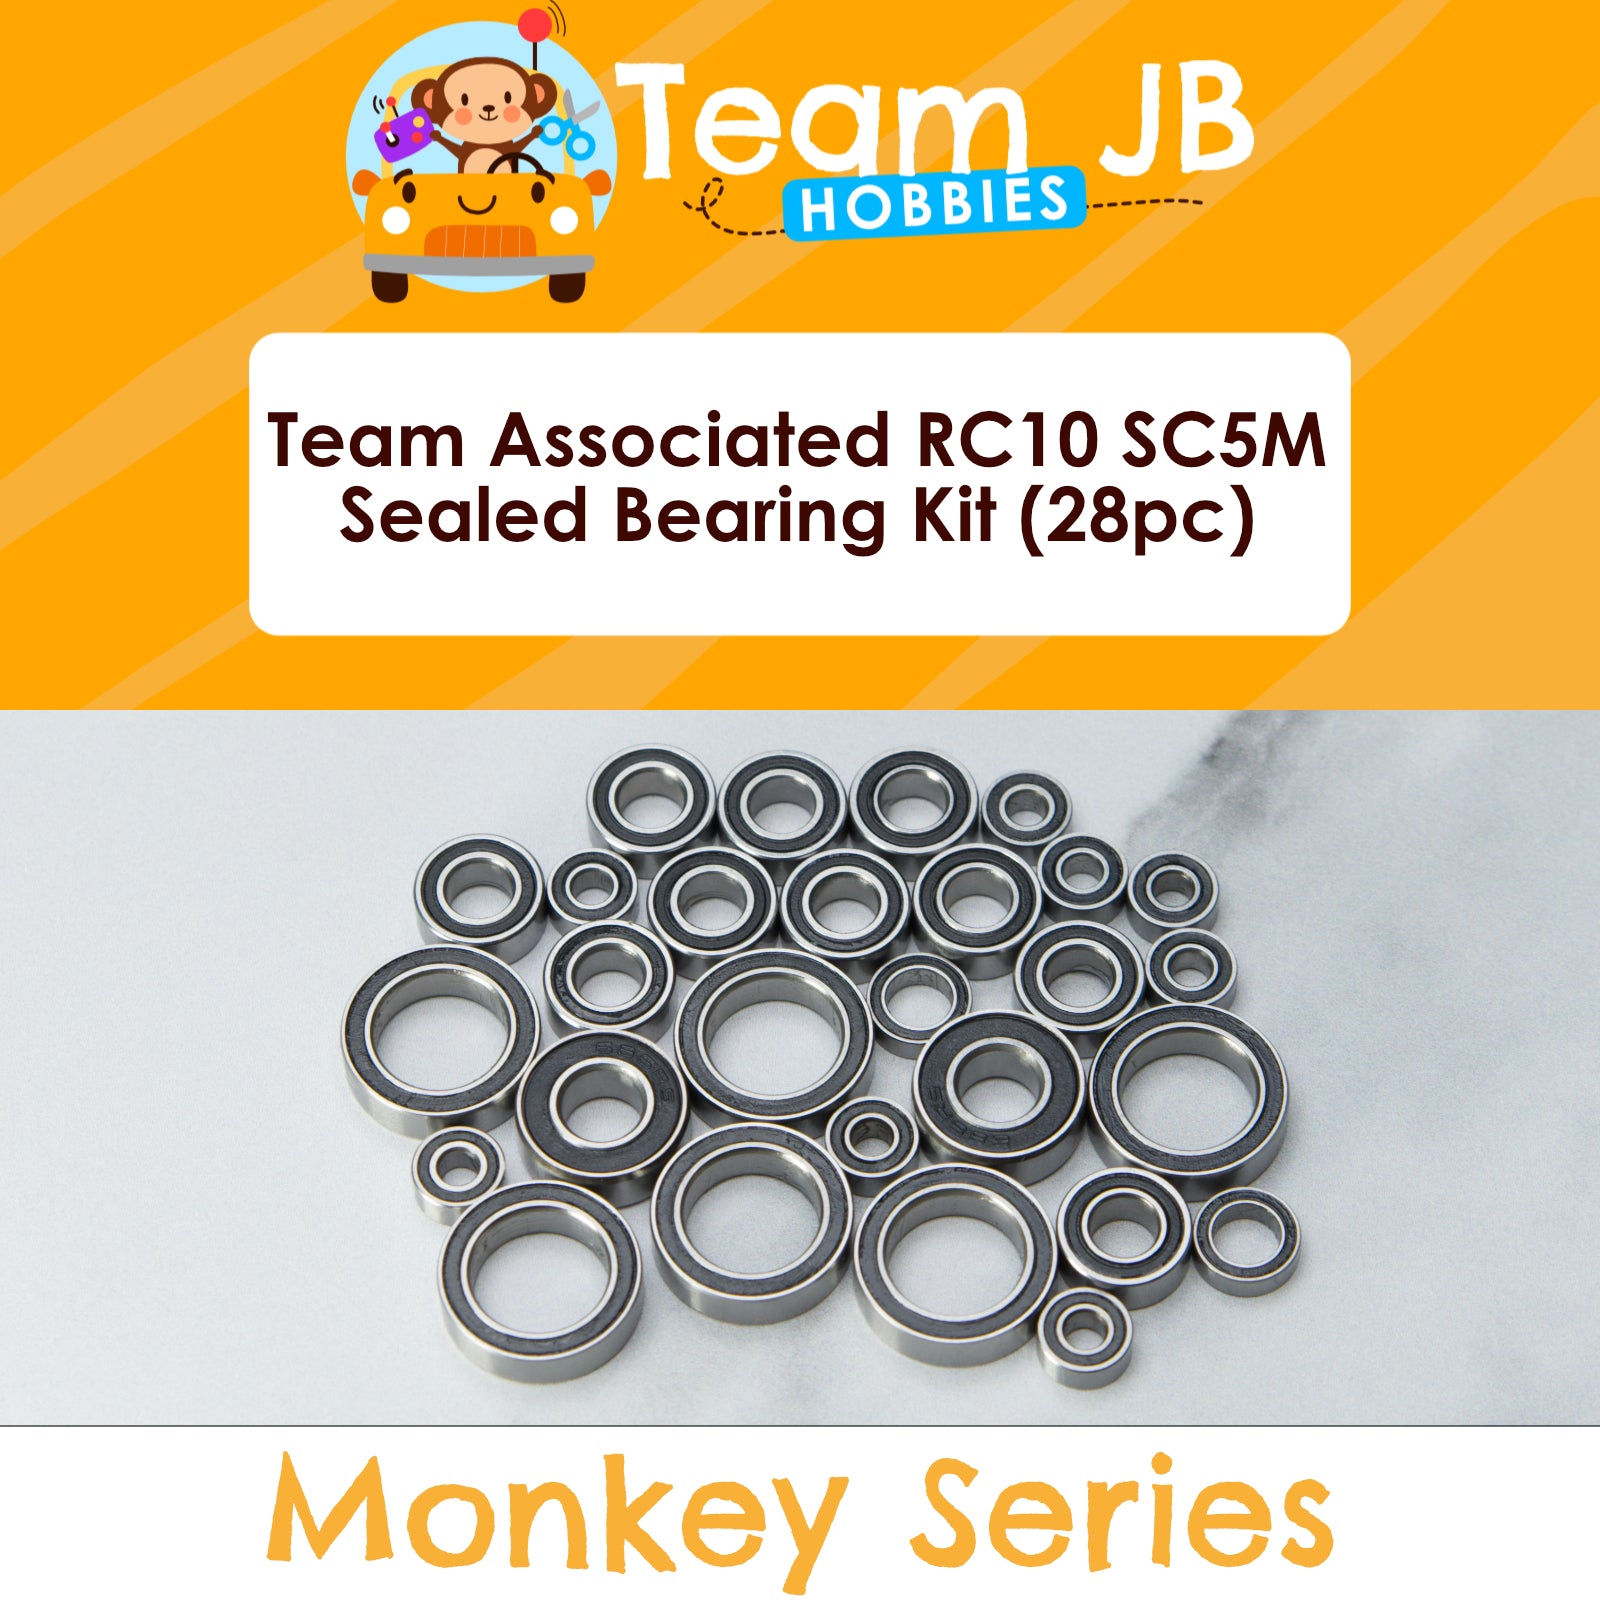 Team Associated RC10 SC5M - Sealed Bearing Kit